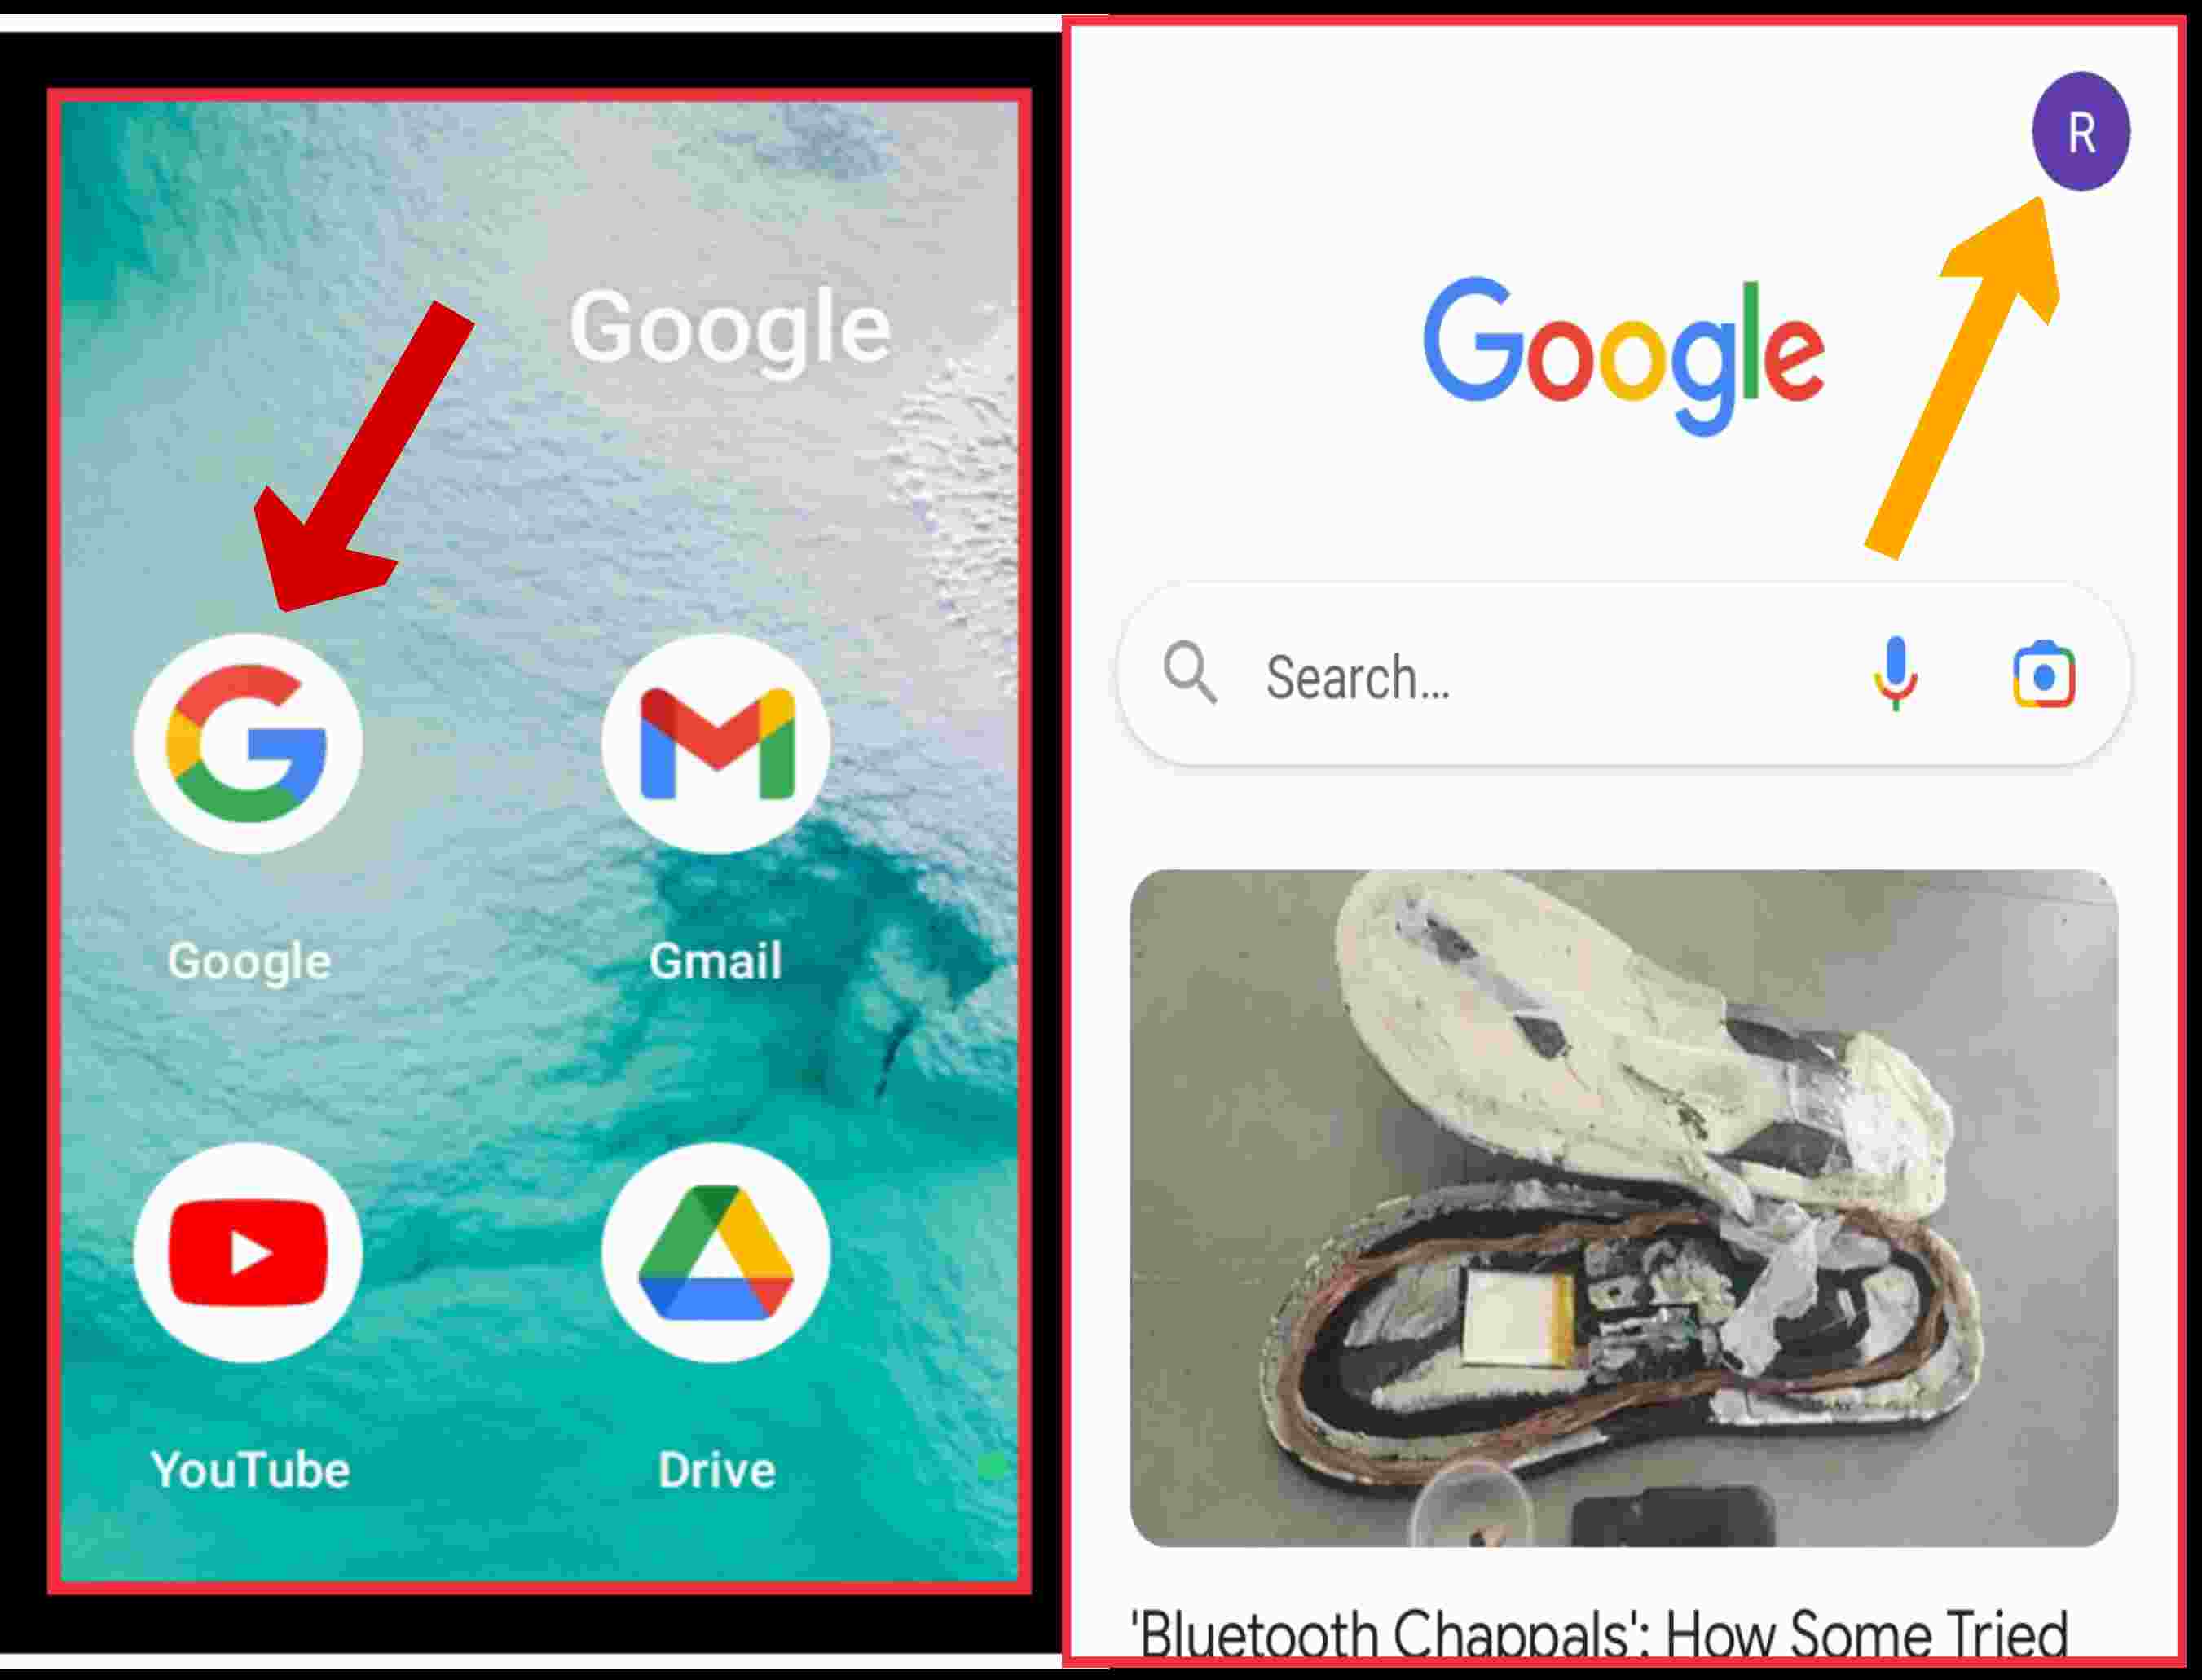 गूगल कैसे चालू करें | Google Kaise Chalu Kare
STEP 1